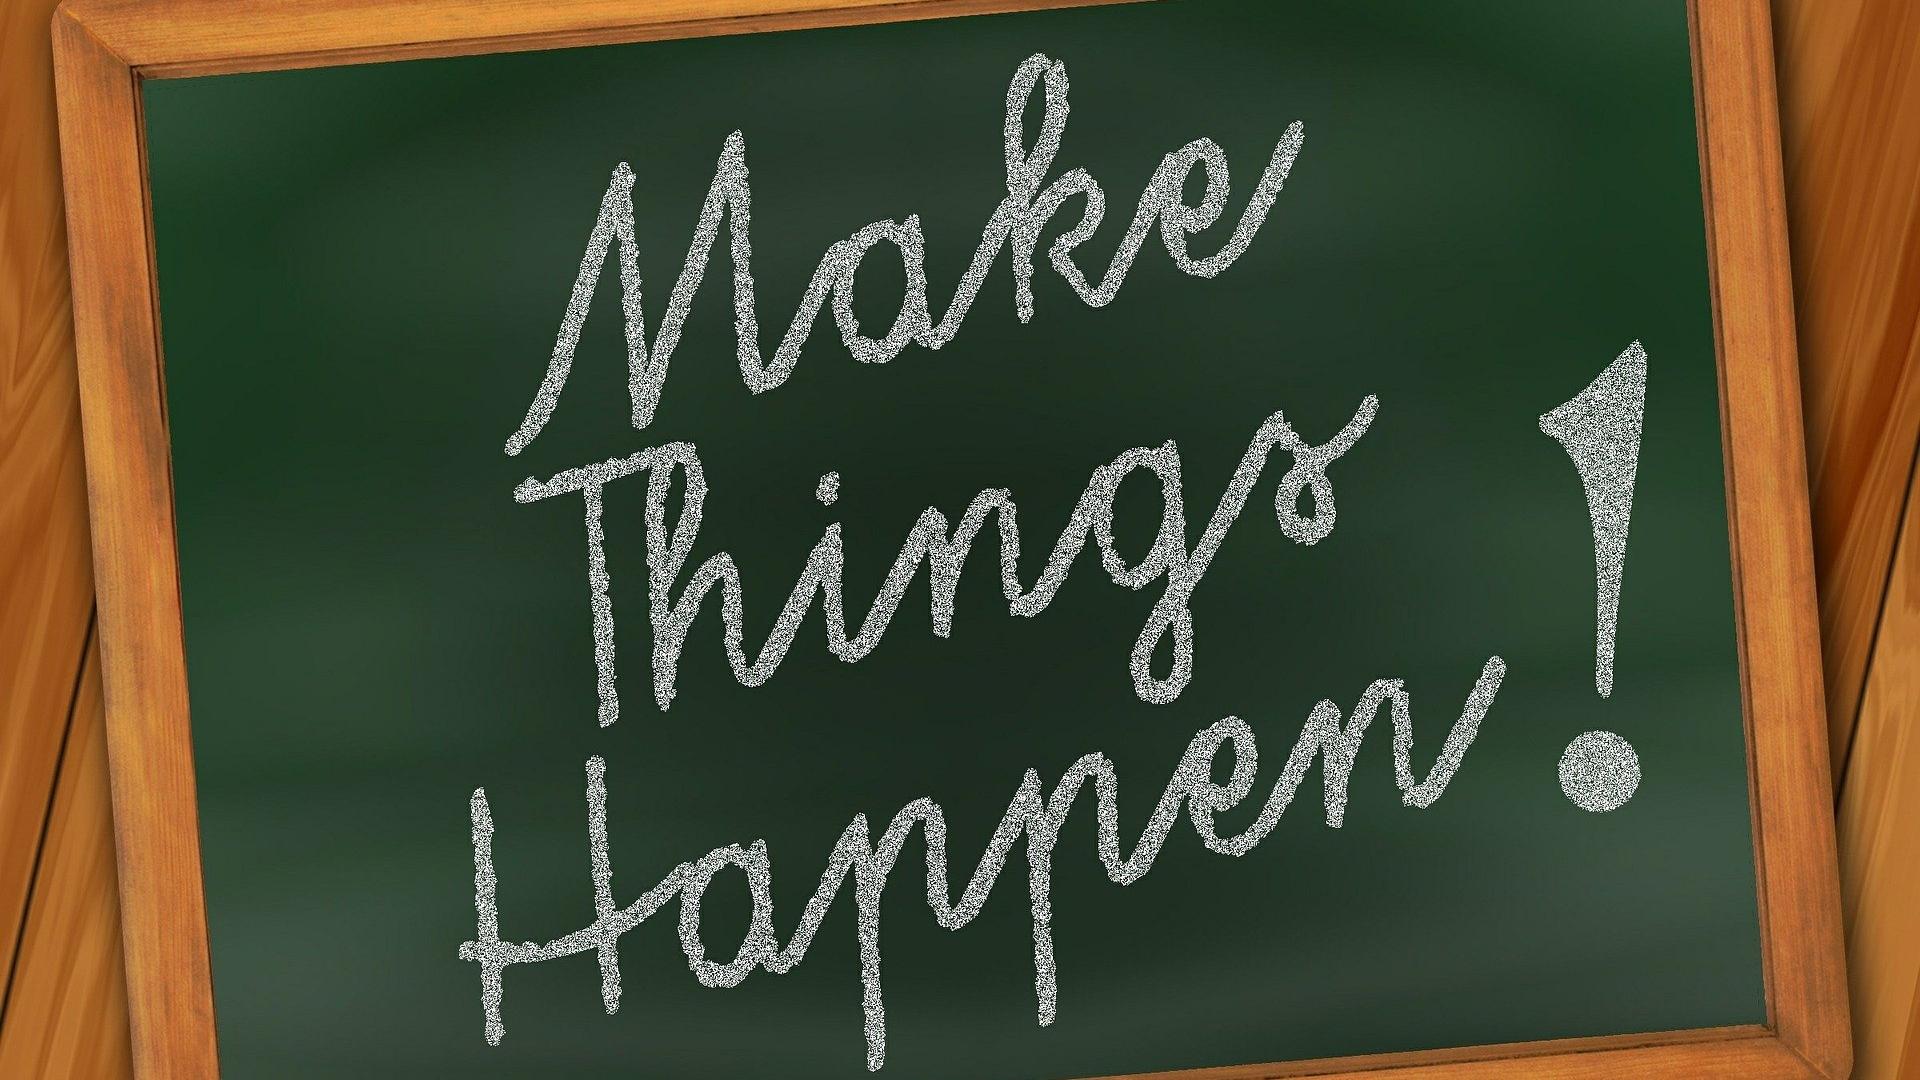 Make-things-happen-pixabay-geralt_blackboard-398453_1920